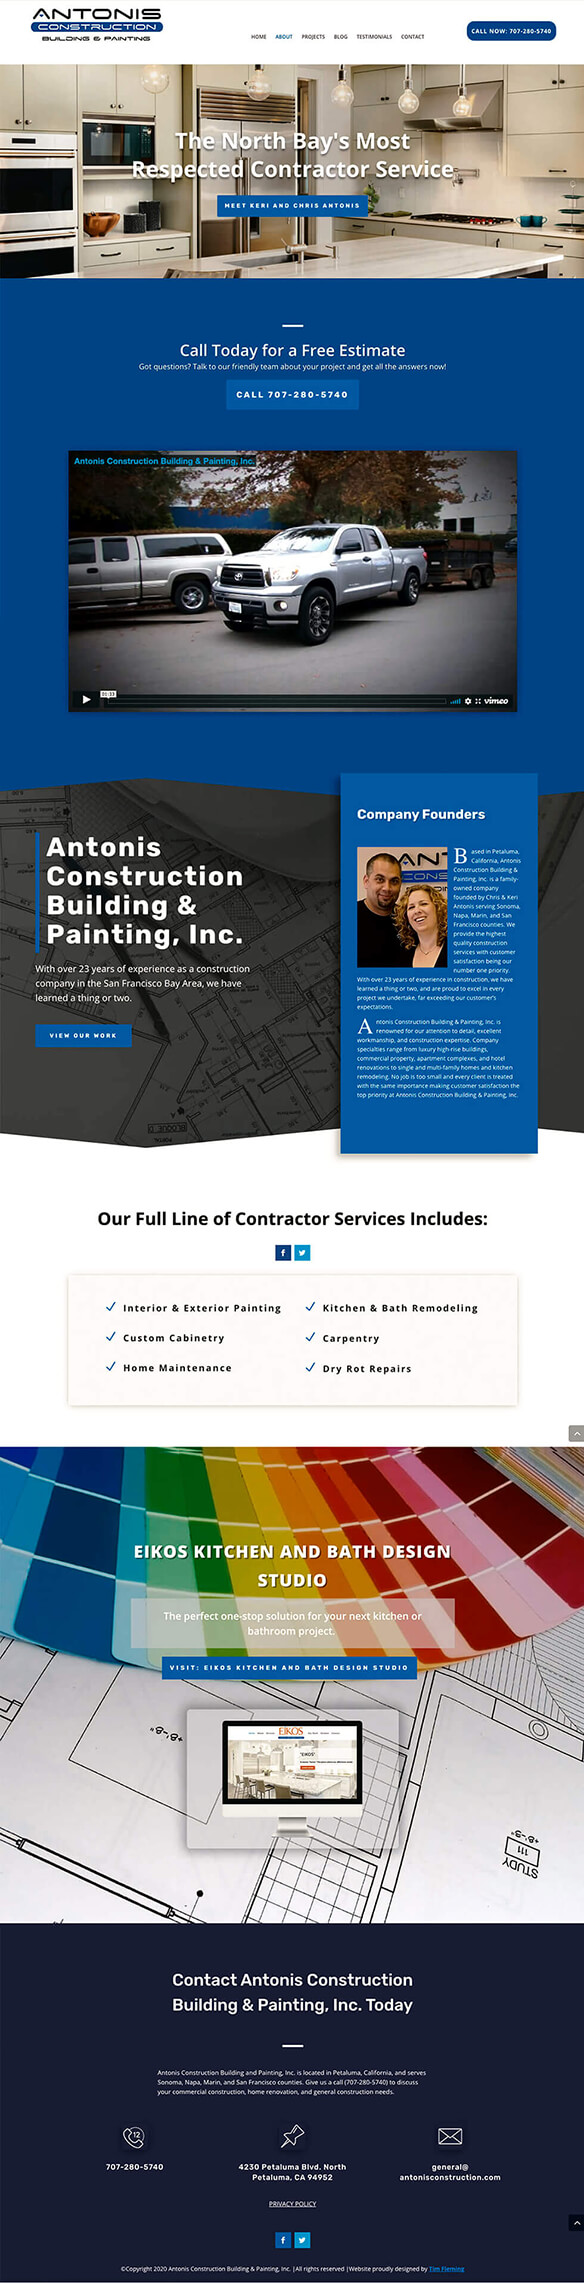 Antonis Construction home page mockup